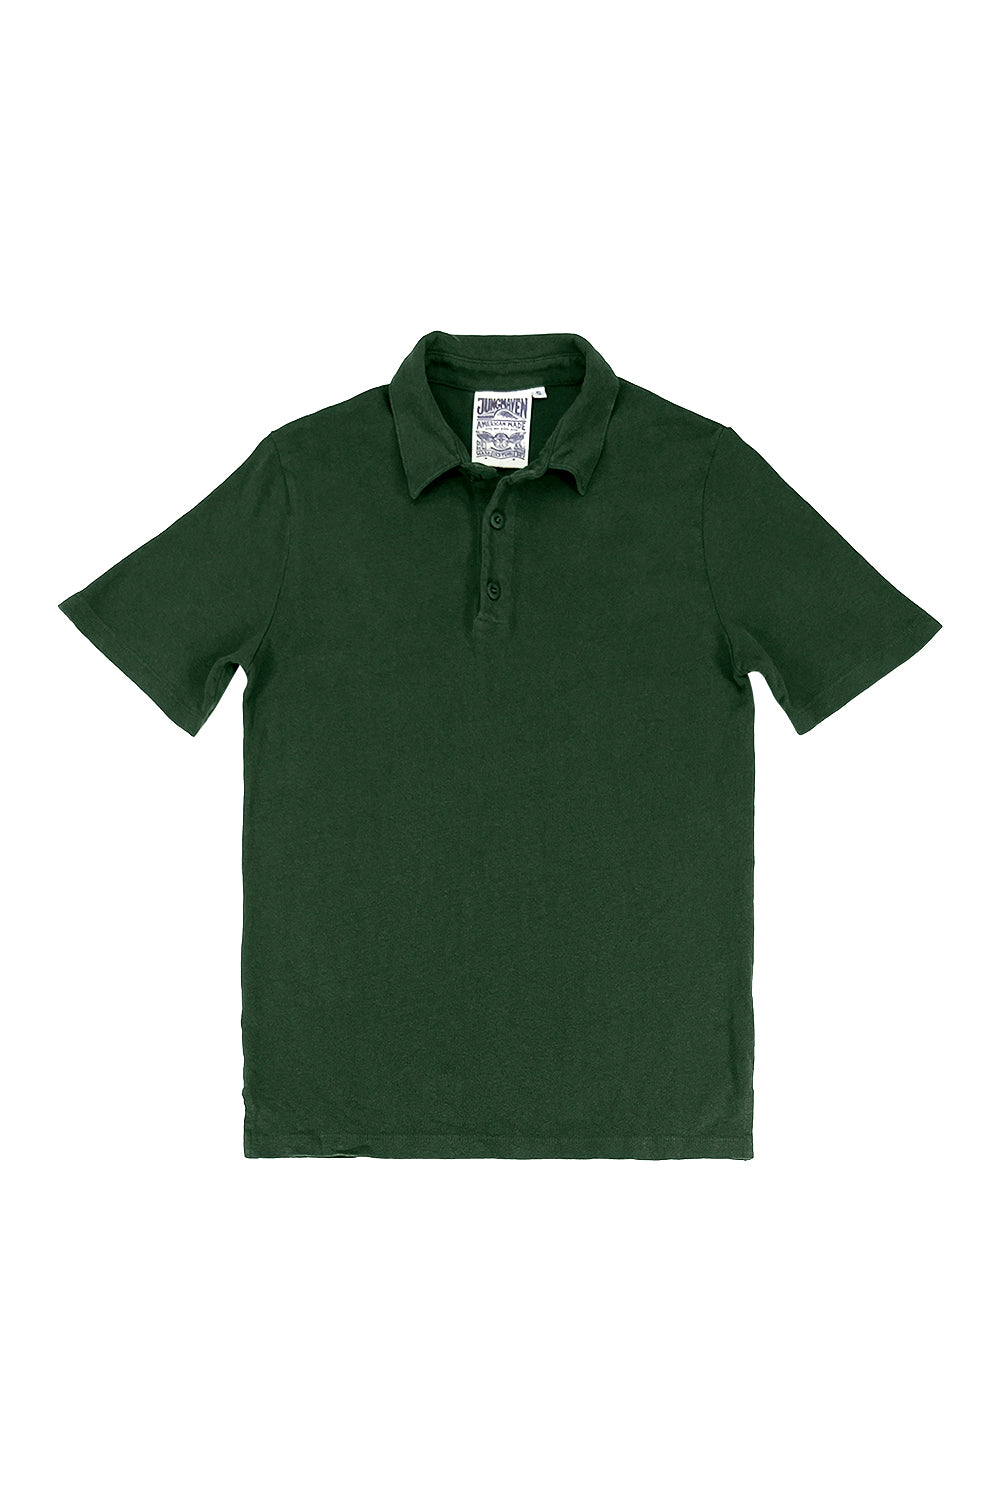 Preston Polo Shirt | Jungmaven Hemp Clothing & Accessories / Color: Hunter Green